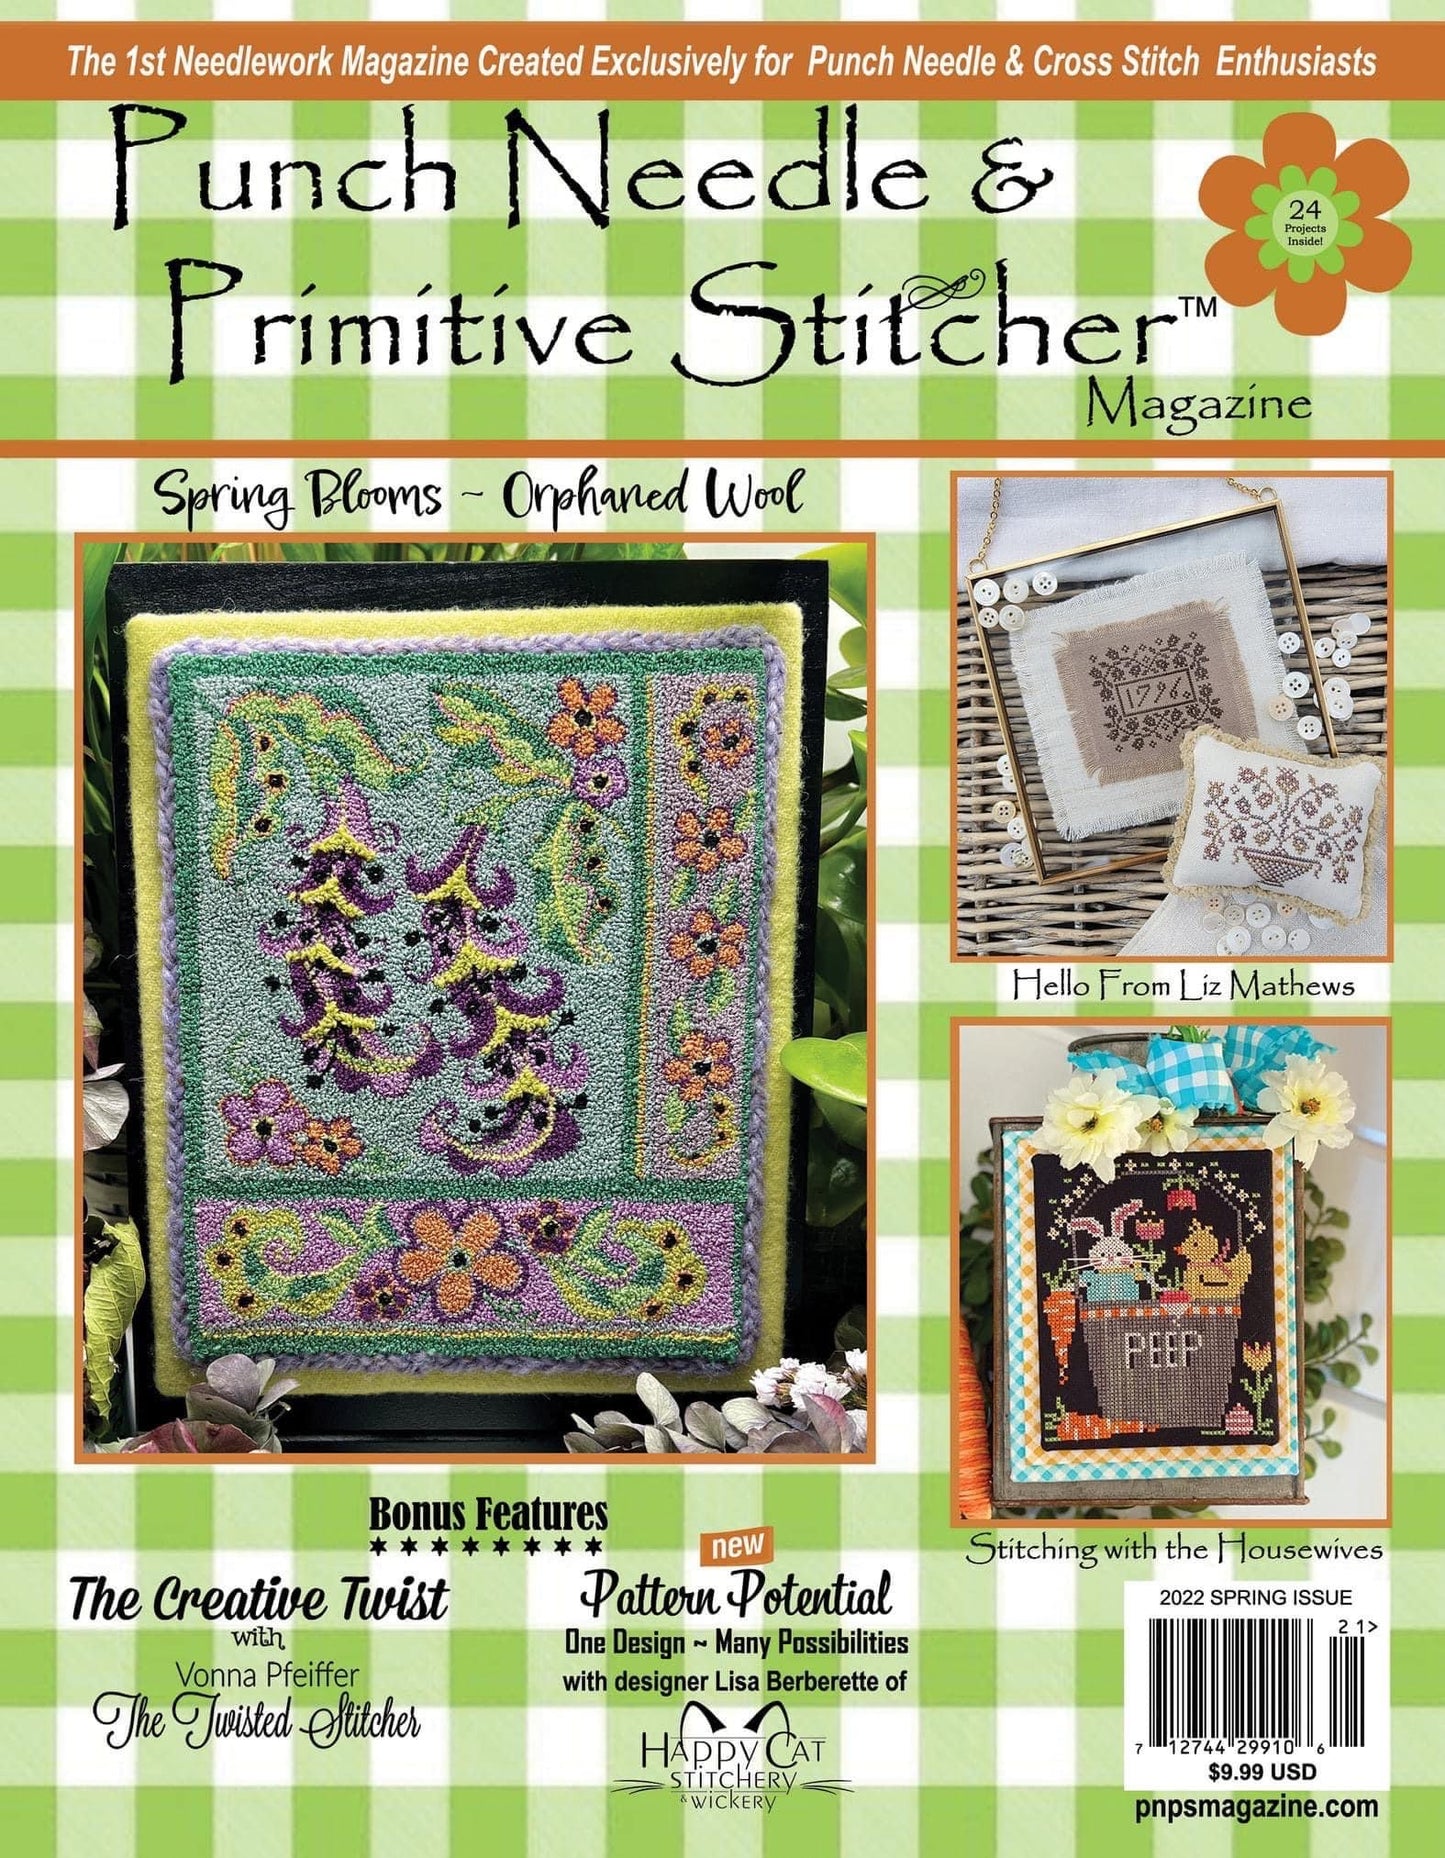 Punch Needle & Primitive Stitcher Magazine 2022 - Spring Issue - Now on Sale!